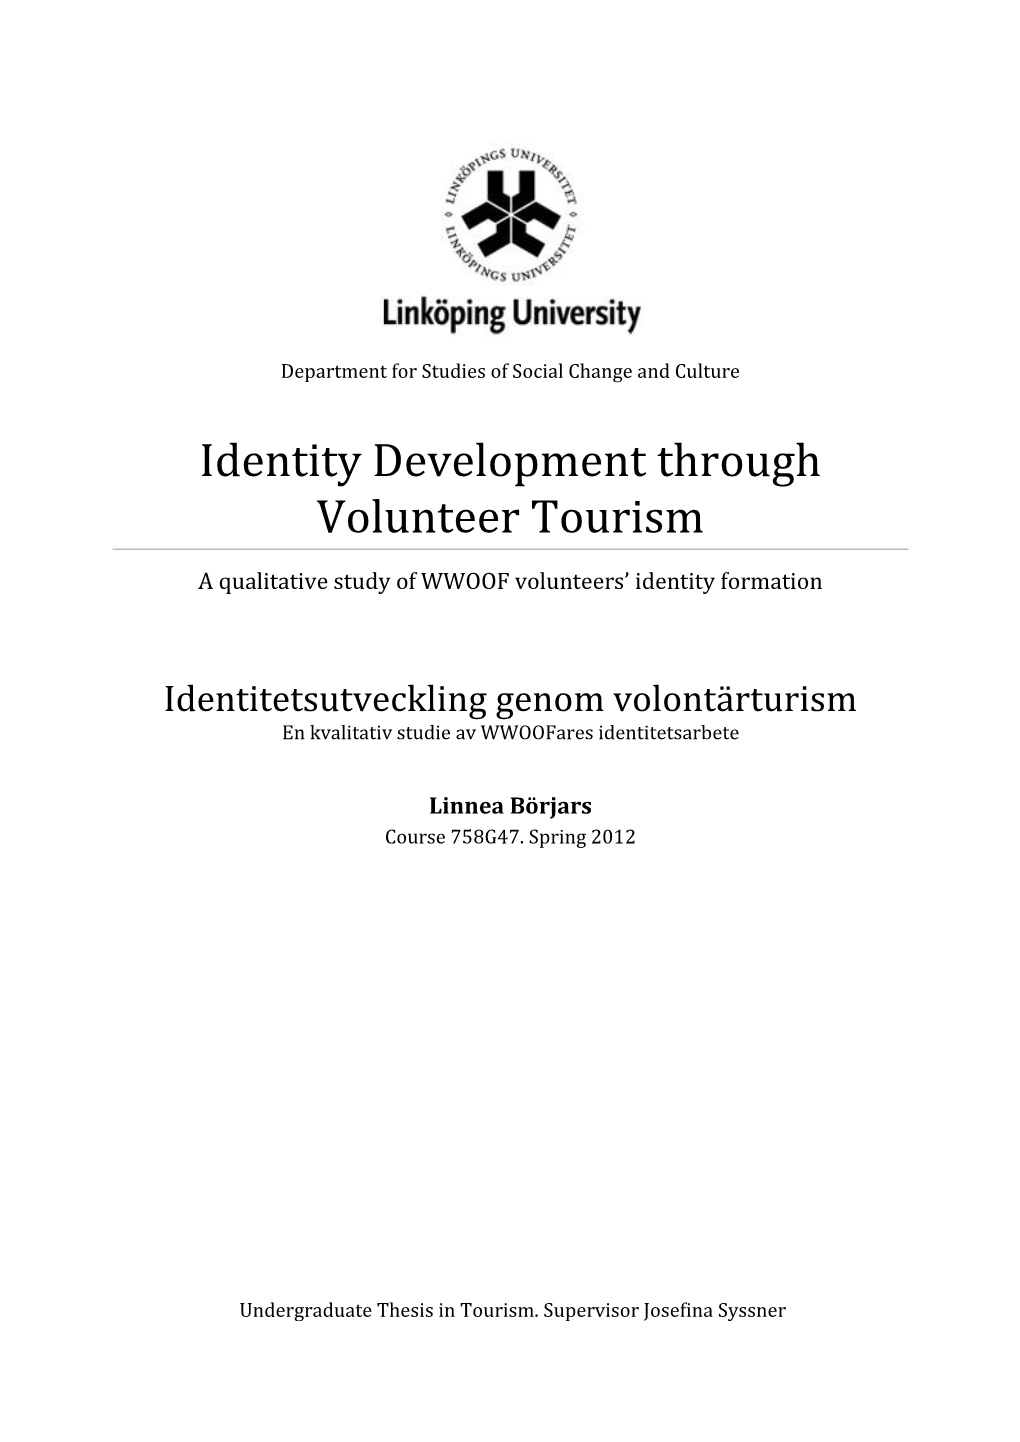 Identity Development Through Volunteer Tourism